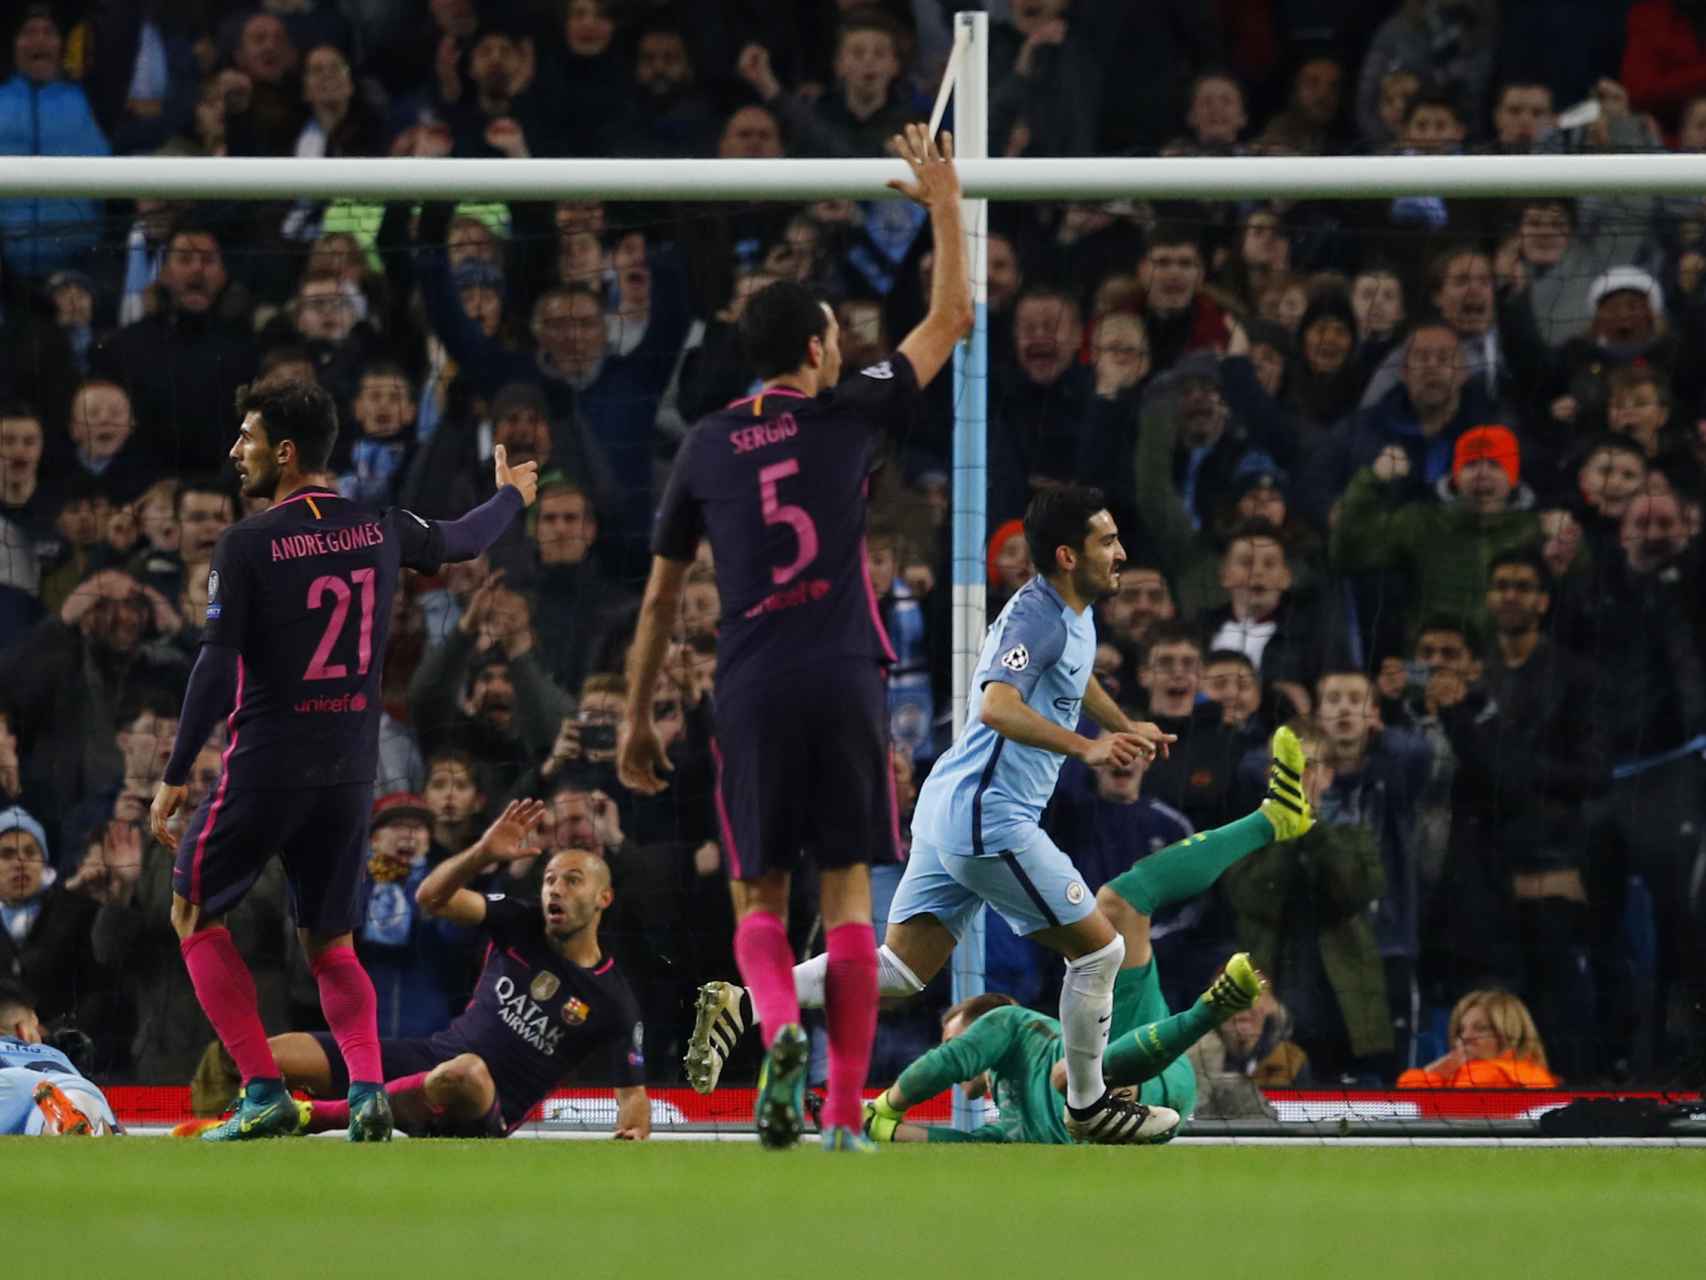 Manchester City's Ilkay Gundogan celebrates scoring their third goal